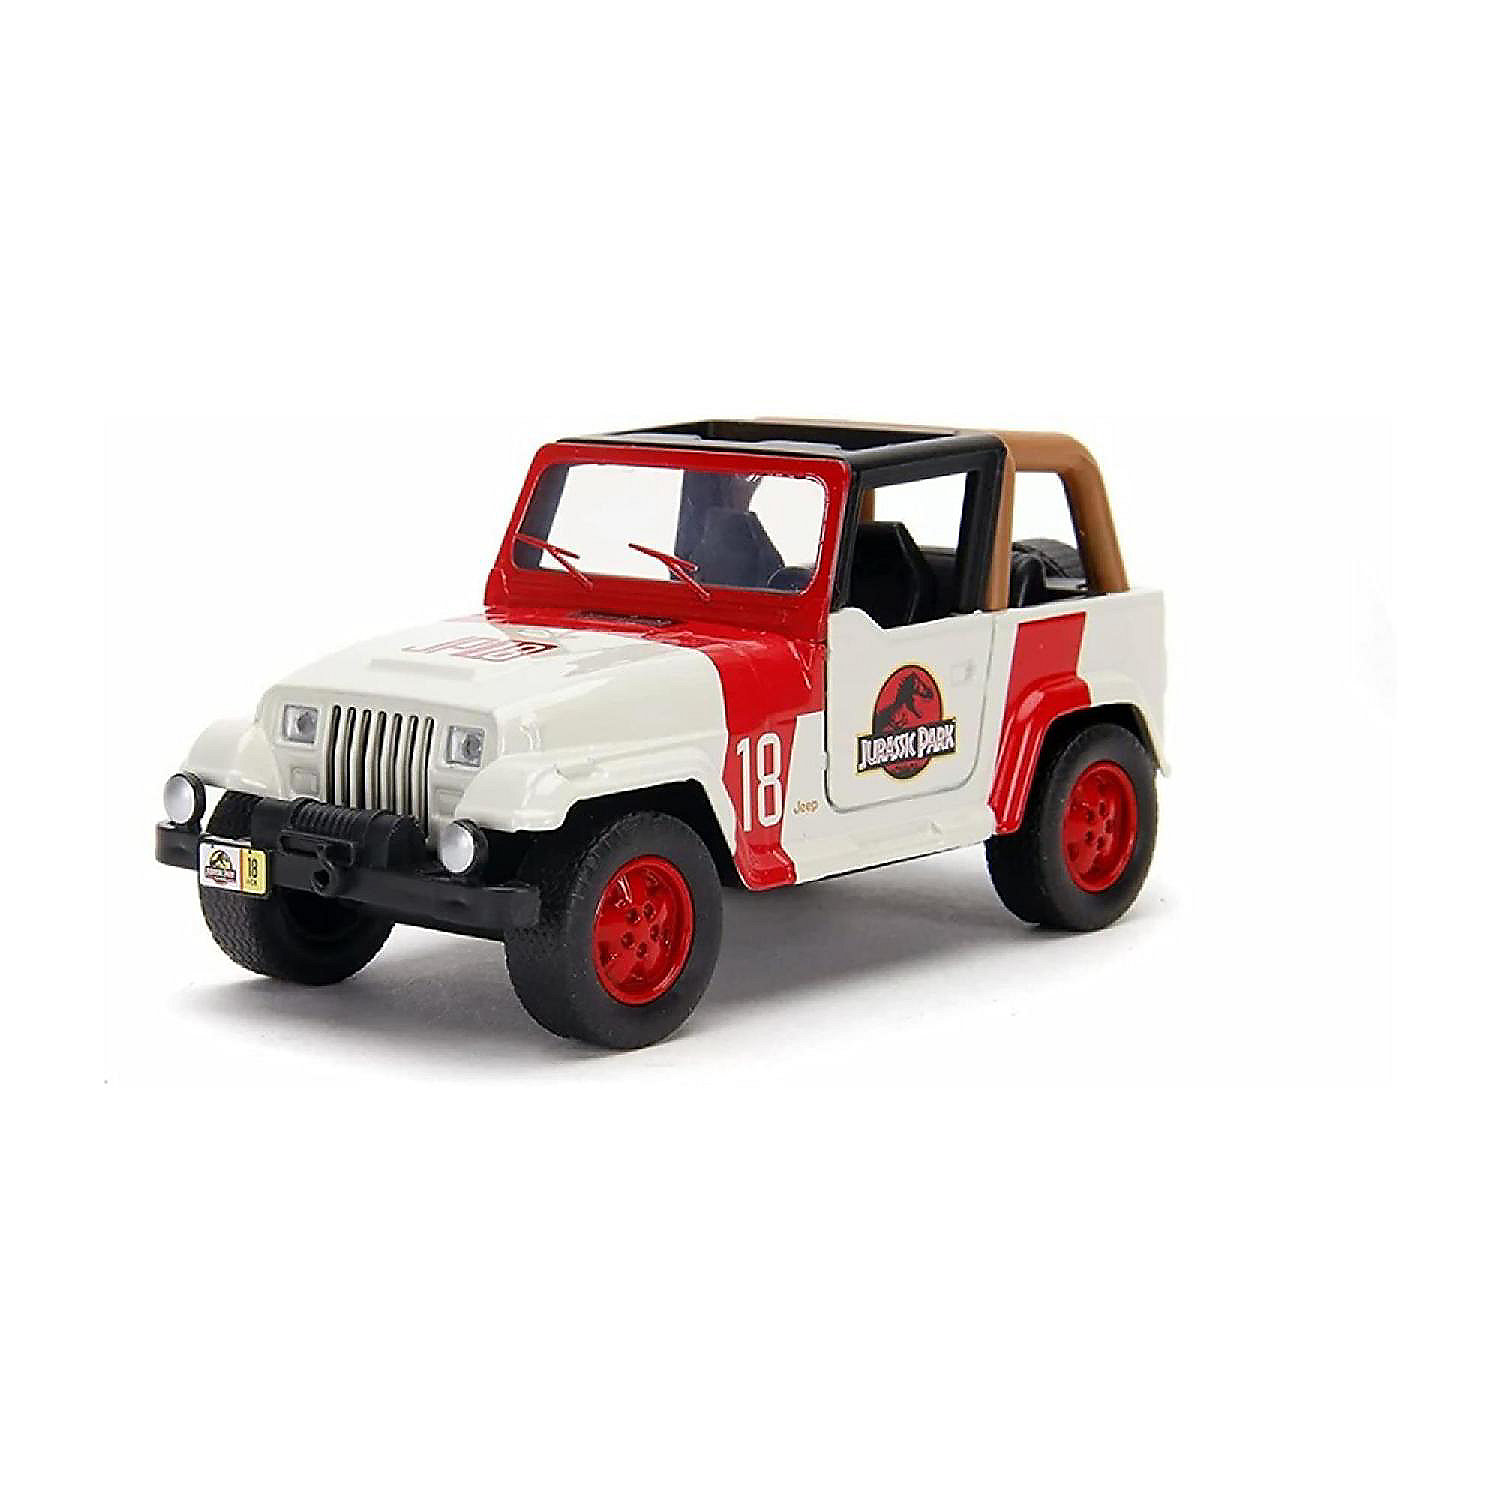 Jurassic World 1:32 92 Jeep Wrangler Diecast Car | Oriental Trading